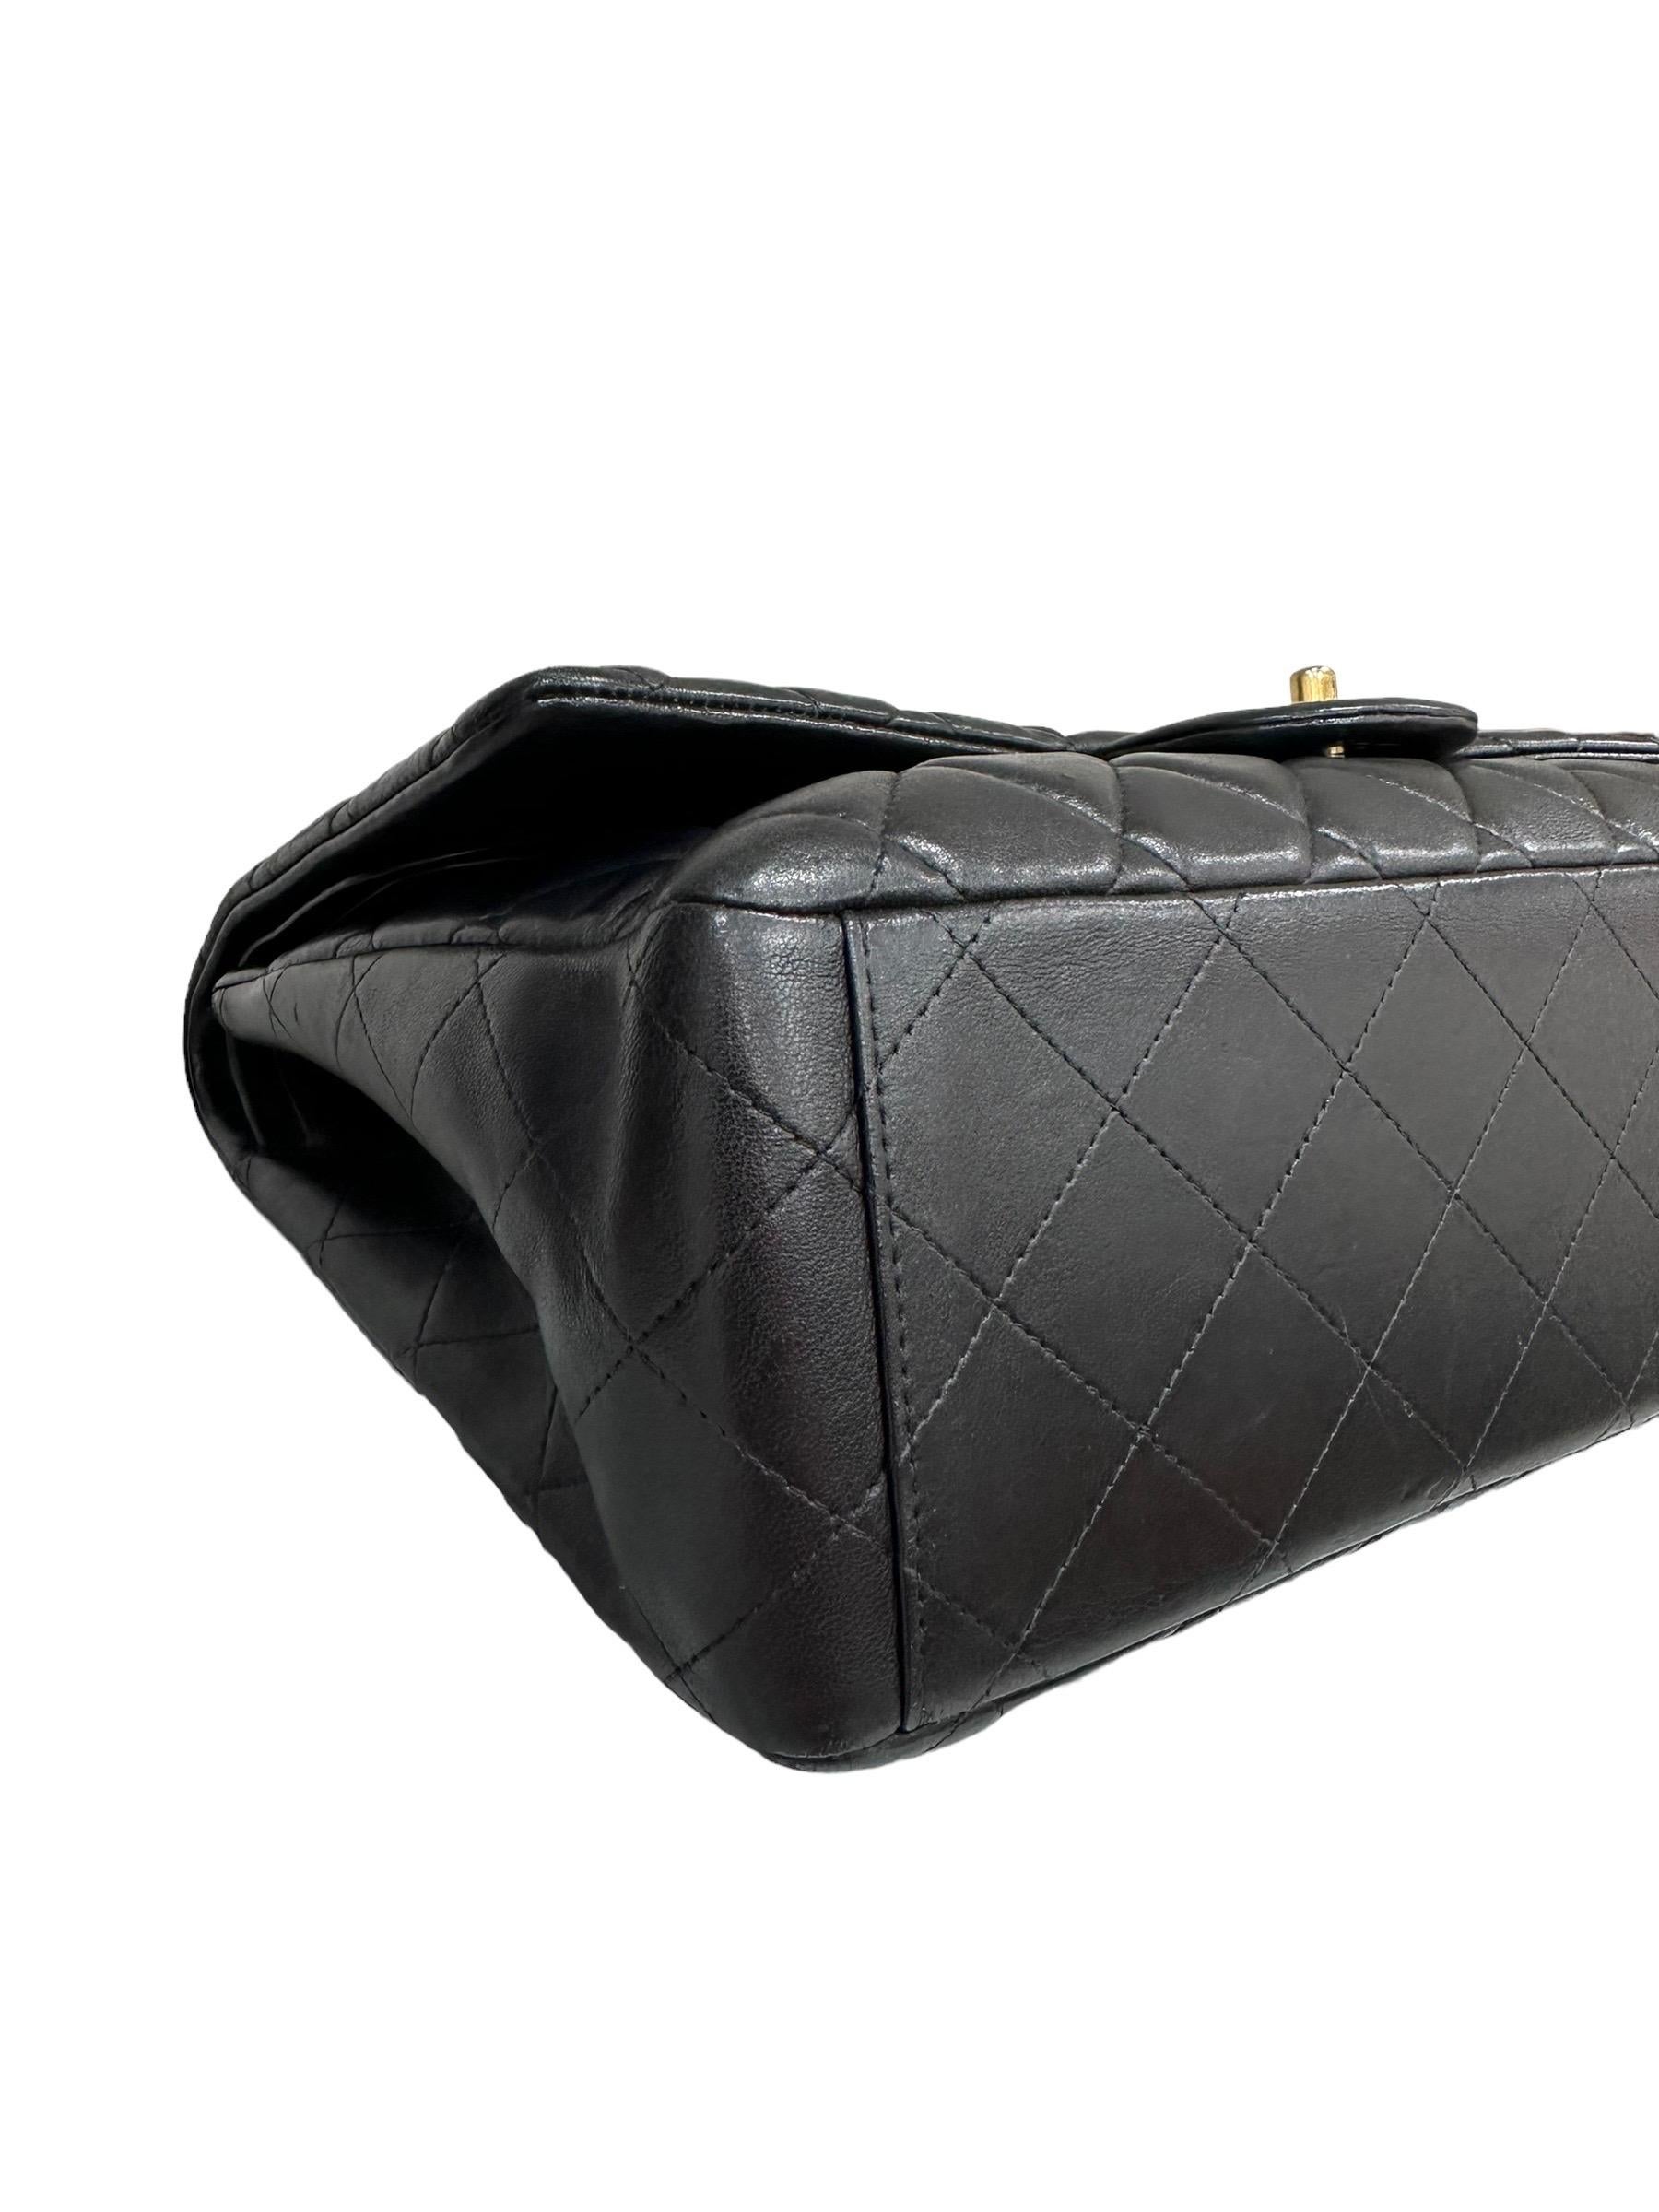 2011 Chanel Timeless Maxi Jumbo Black Leather Top Shoulder Bag 6